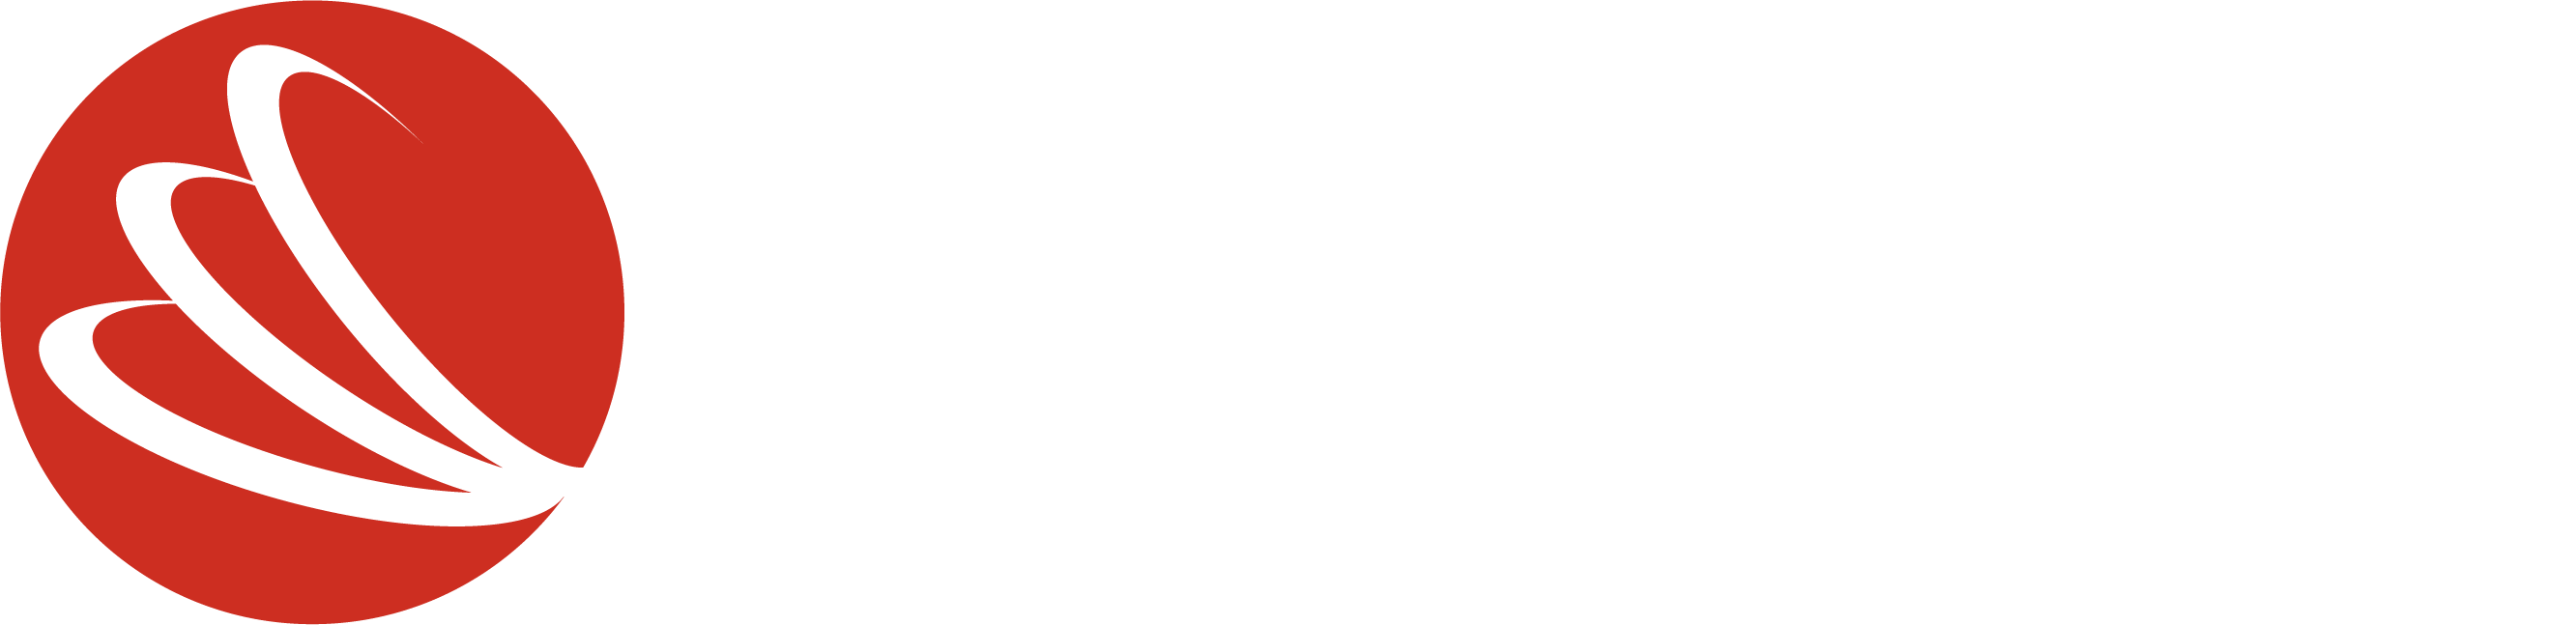 ReportScamTrader